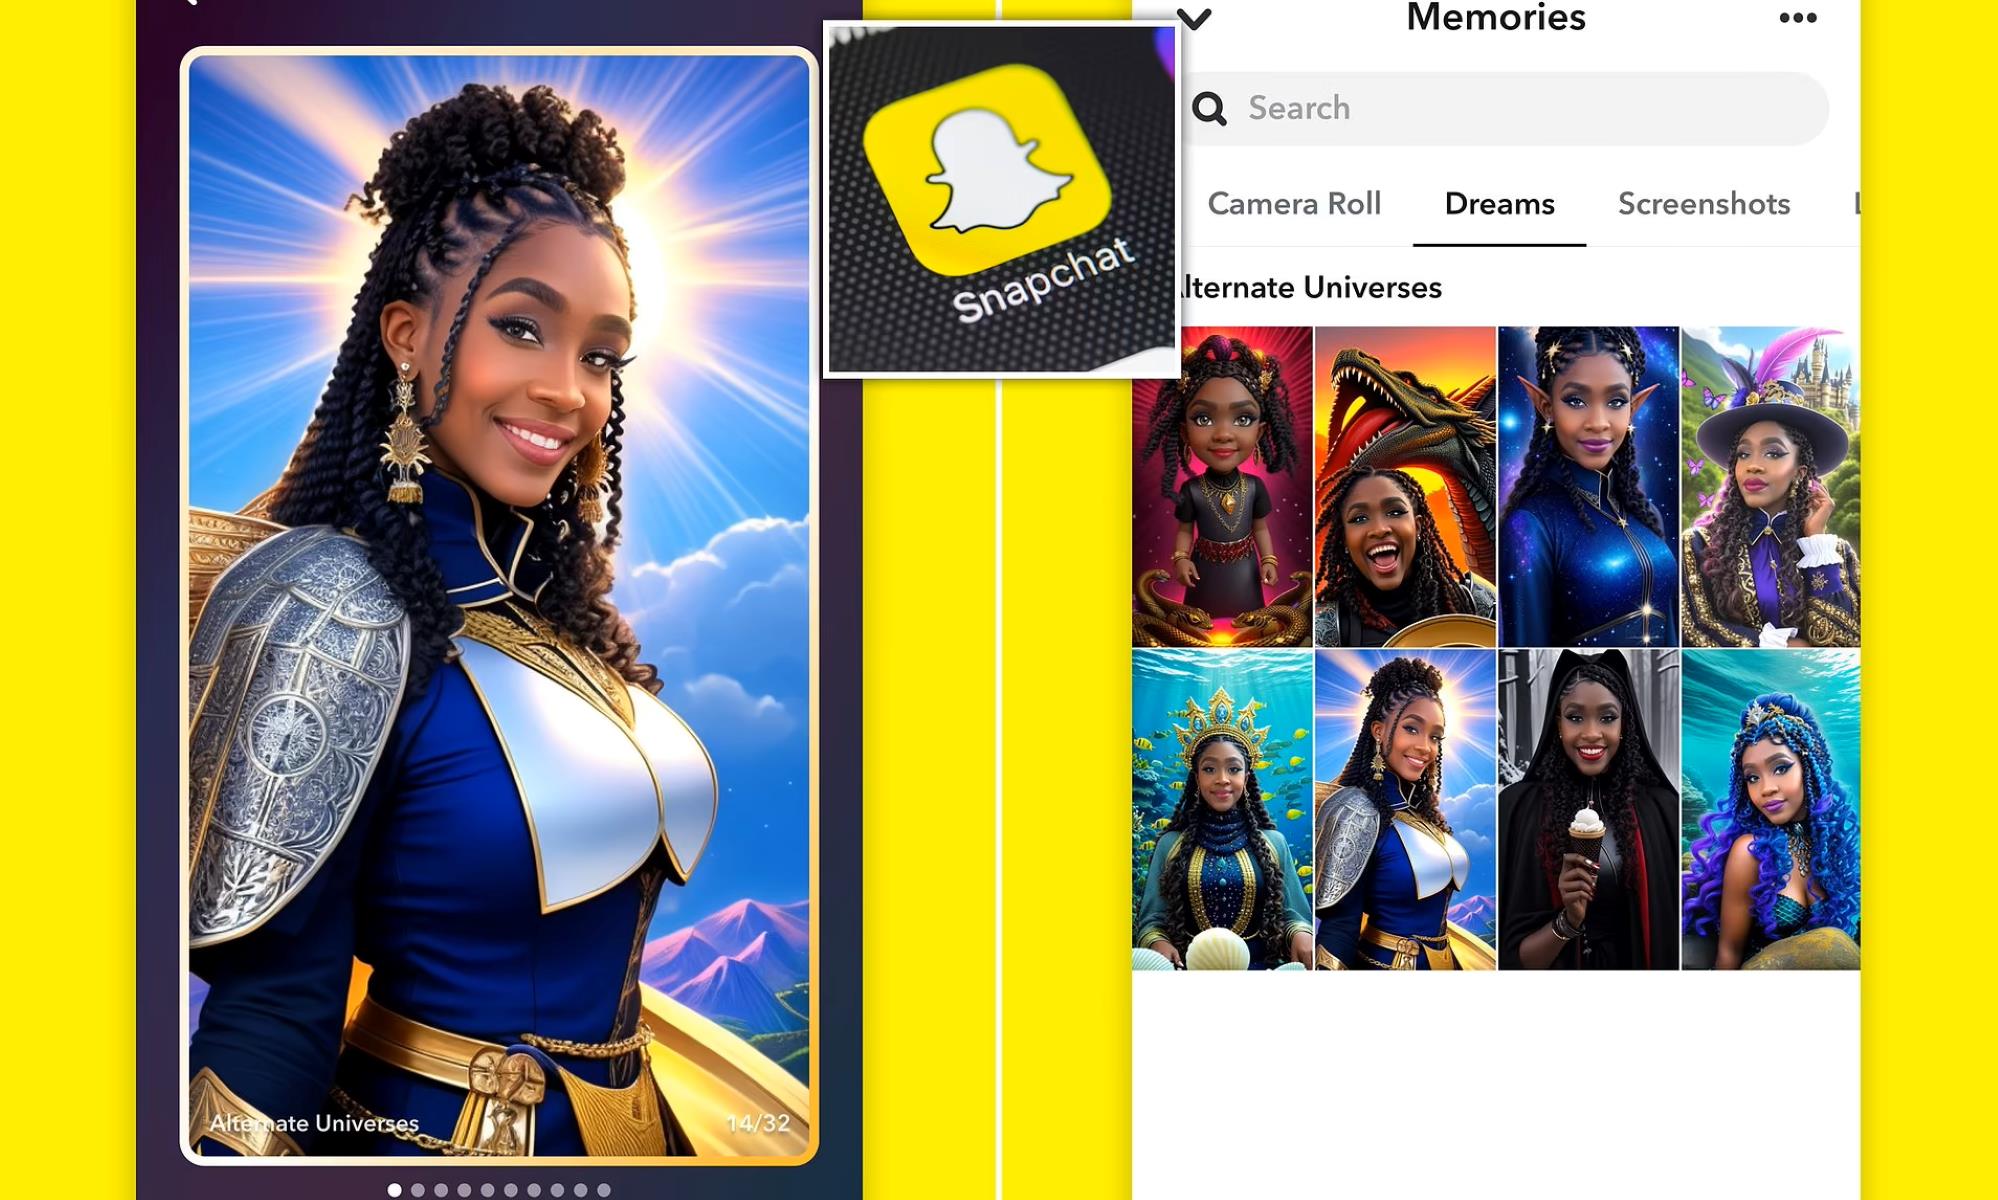 snapchat-launches-ai-selfie-feature-dreams